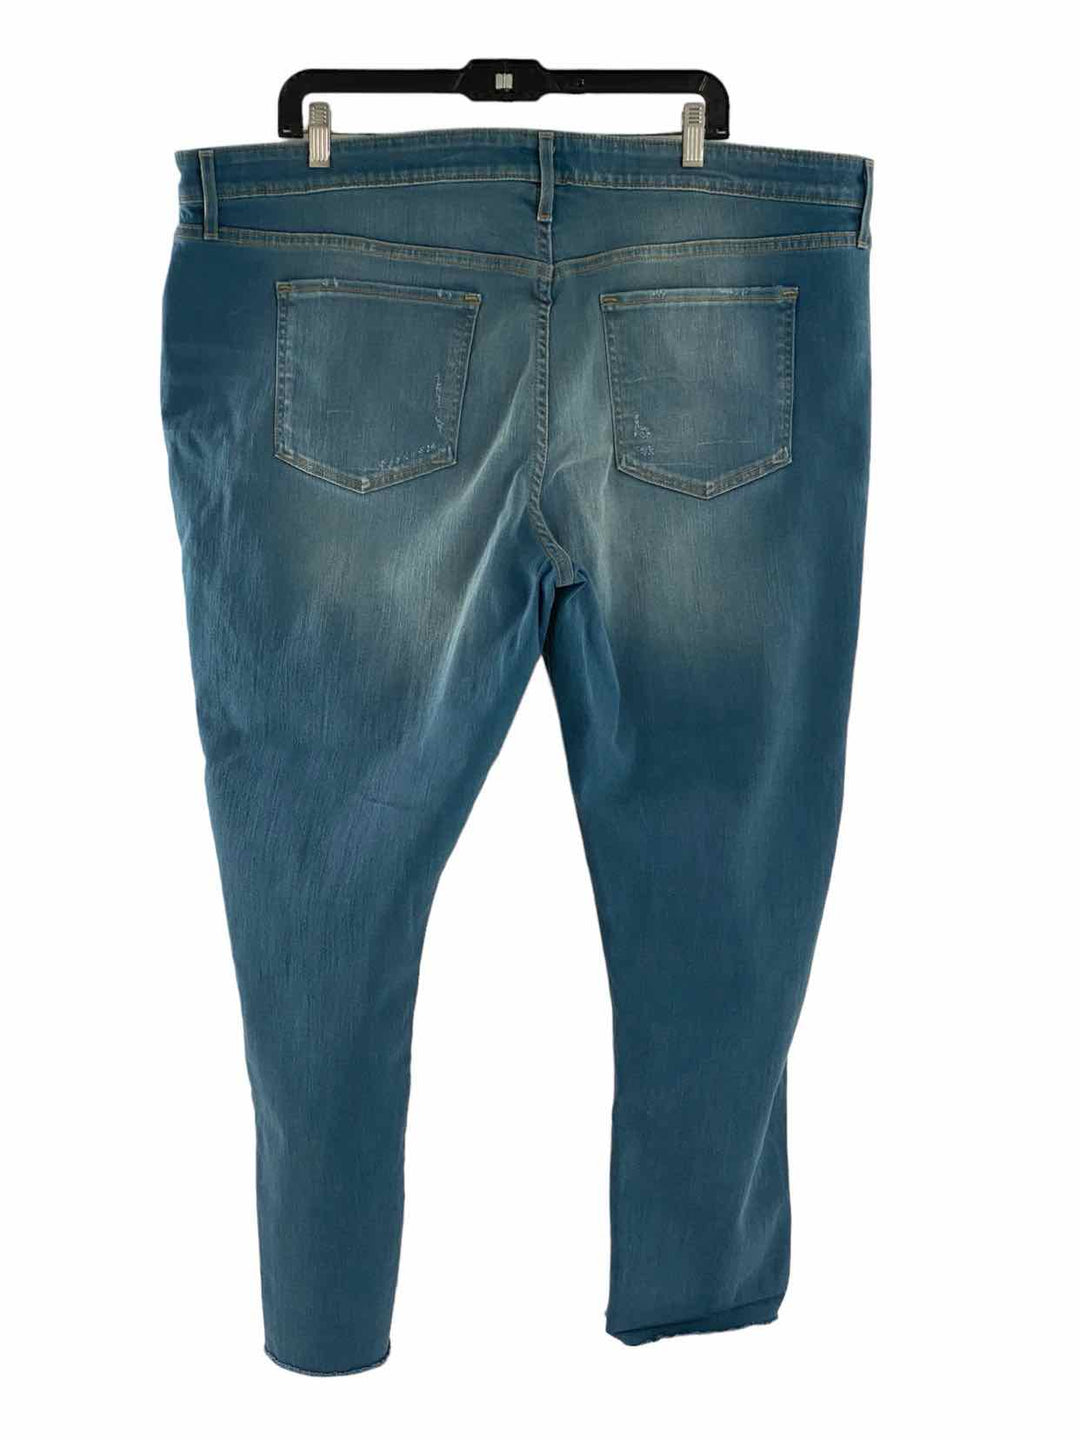 Ava & Viv Size 22W Blue Jeans